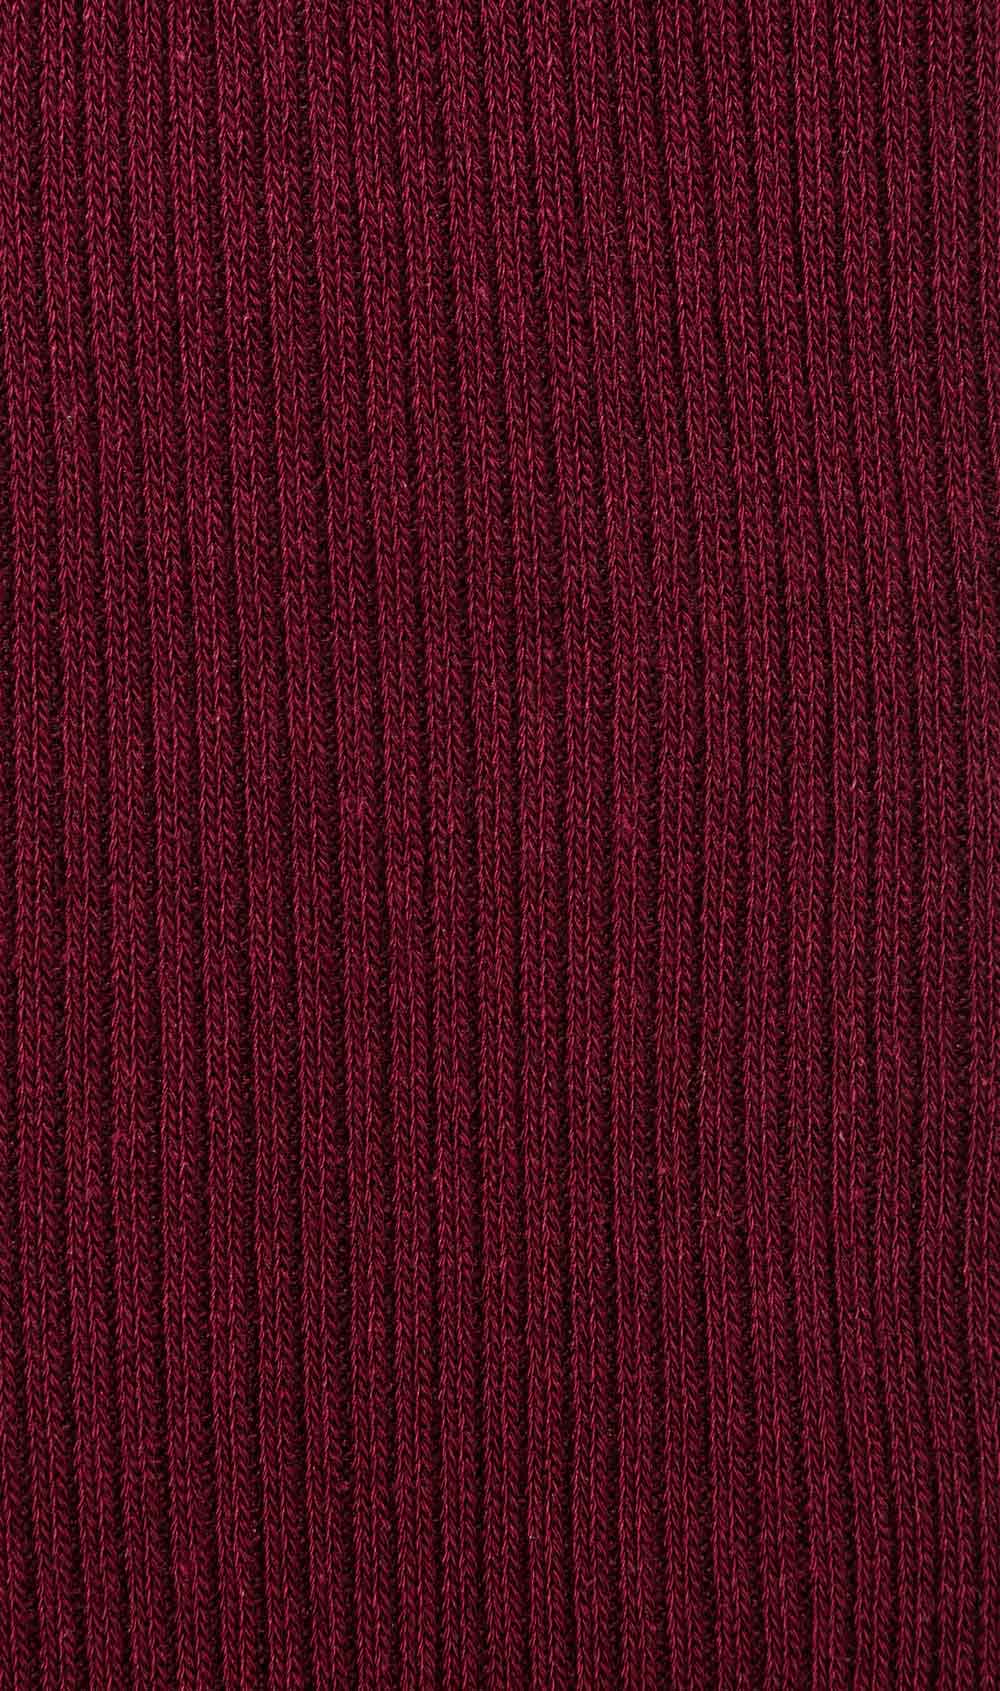 Red Wine Cotton-Blend Socks Fabric